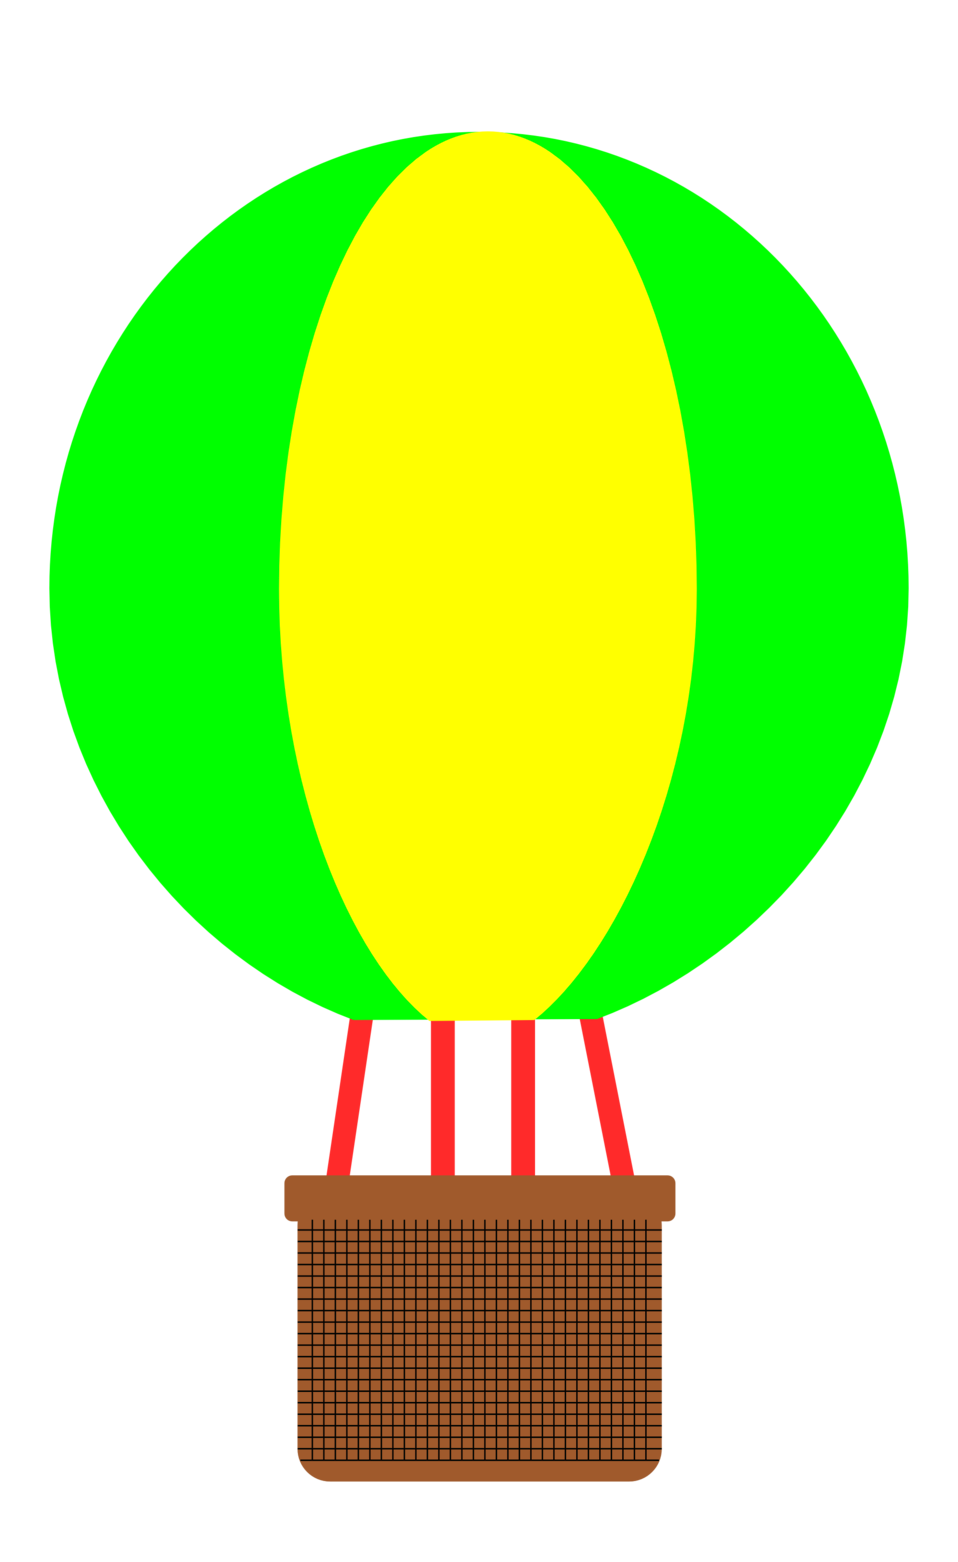 march clipart balloon